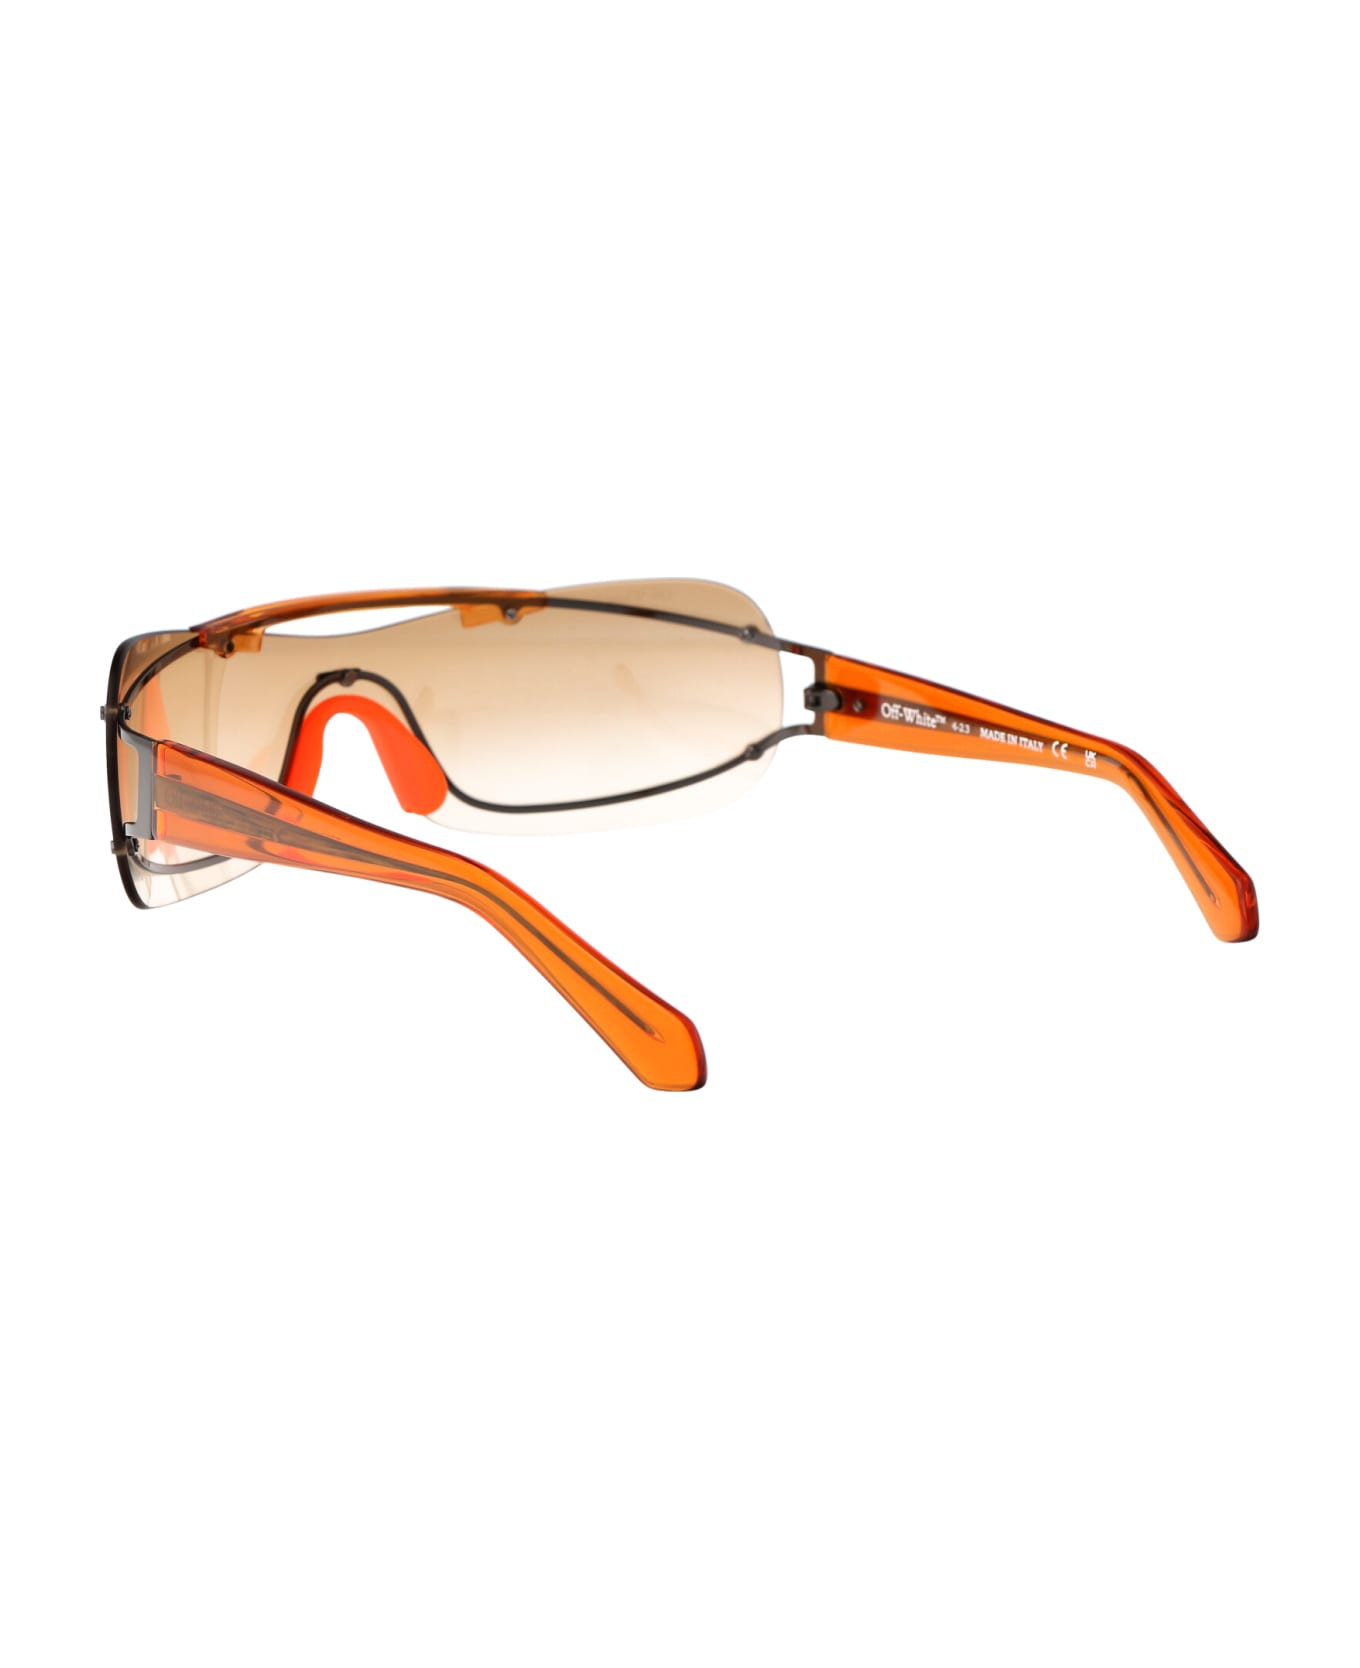 Off-White Big Wharf Sunglasses - 7720 GUN METAL サングラス